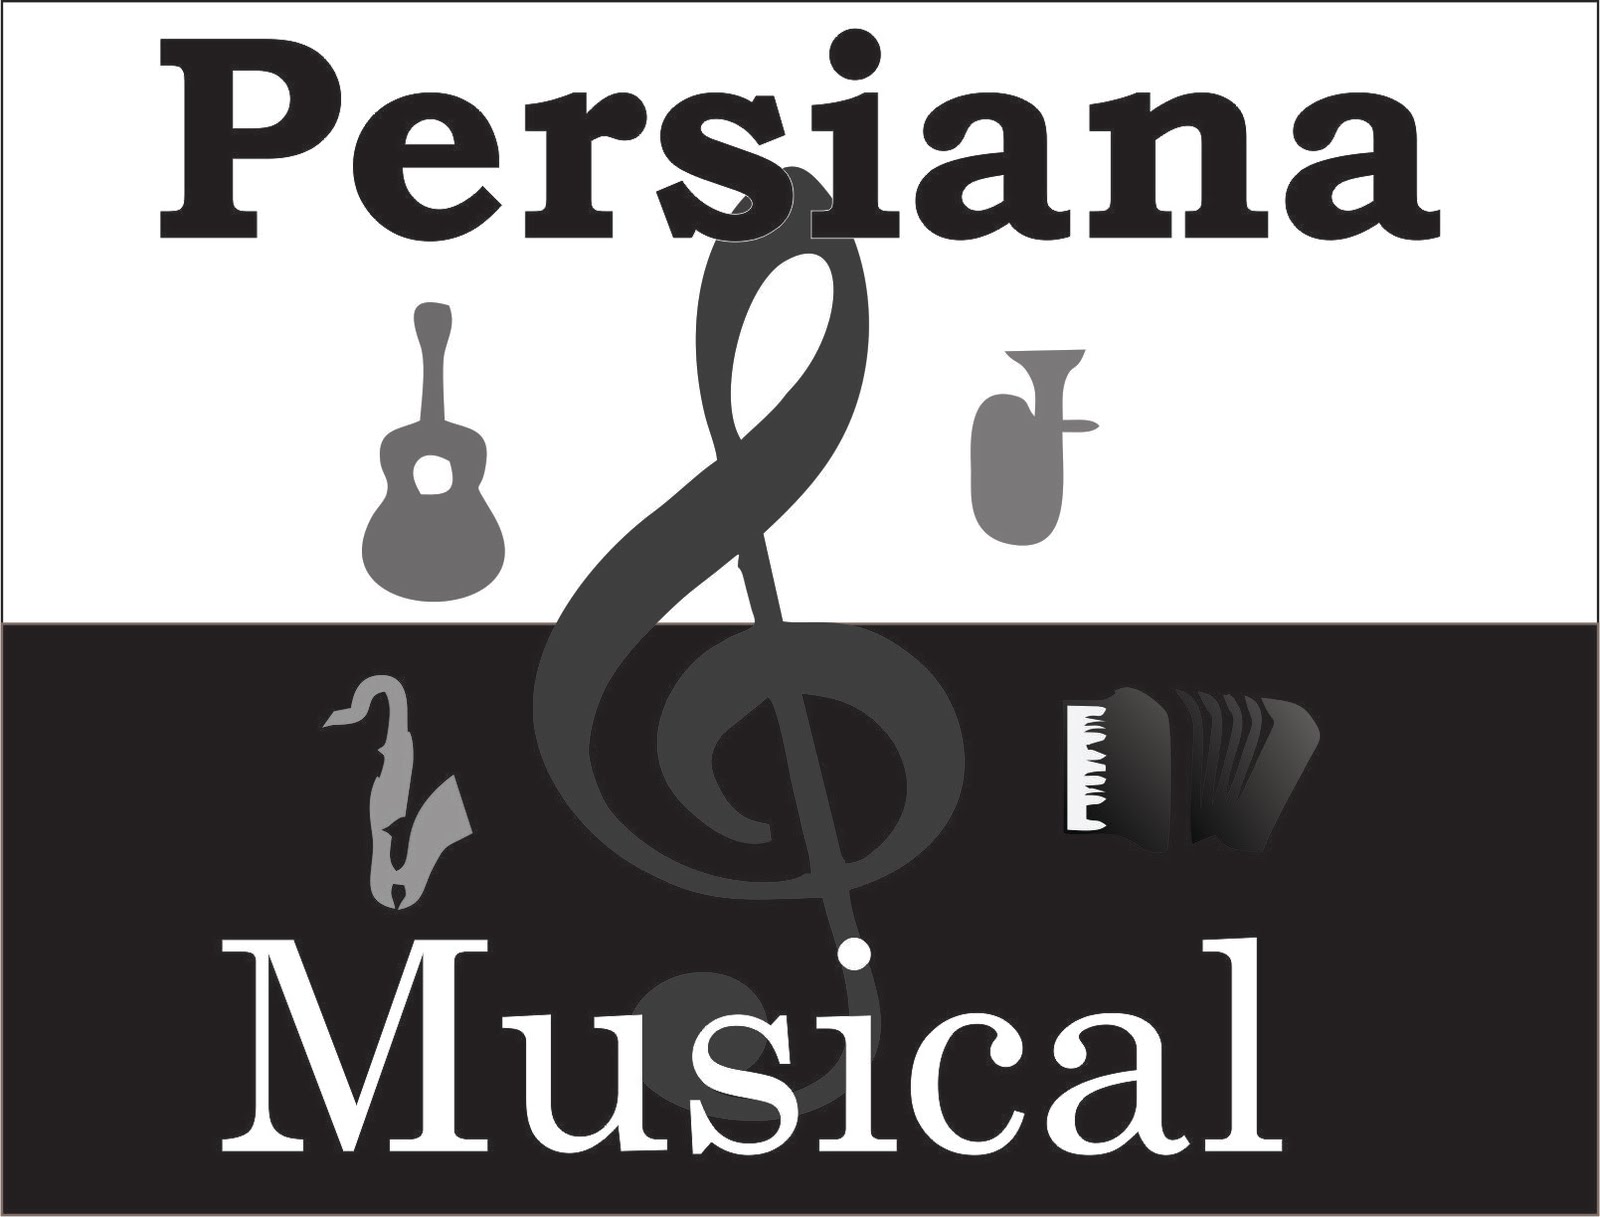 PERSIANA MUSICAL